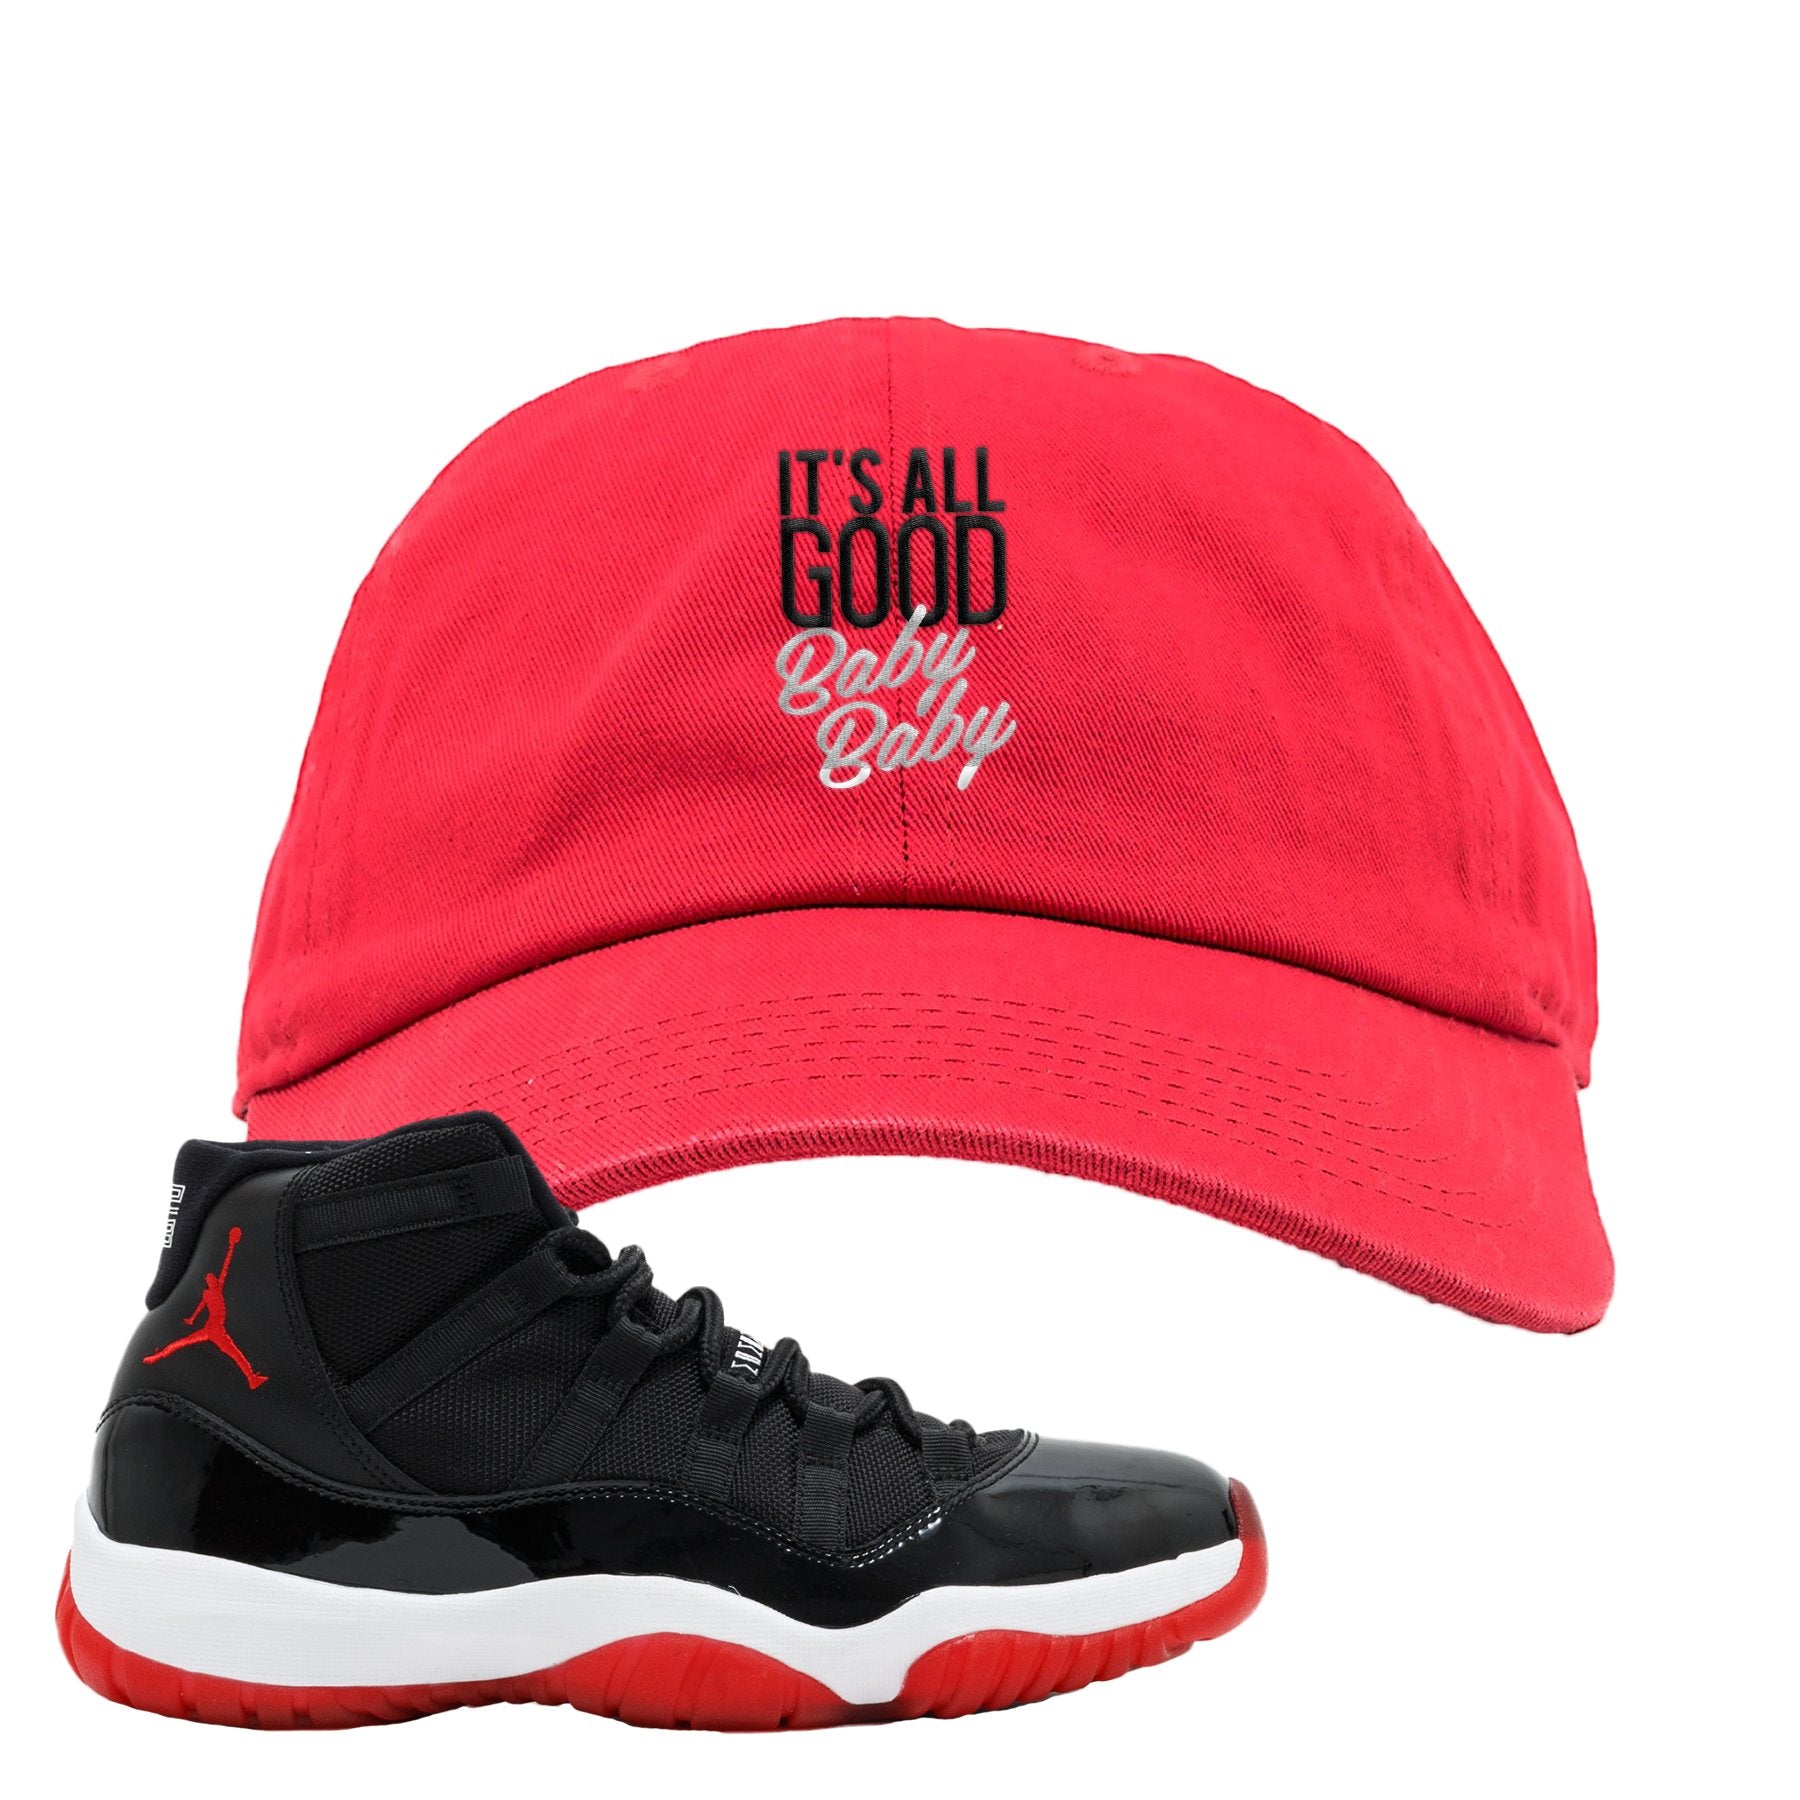 Jordan 11 Bred It's All Good Baby Baby Red Sneaker Hook Up Dad Hat